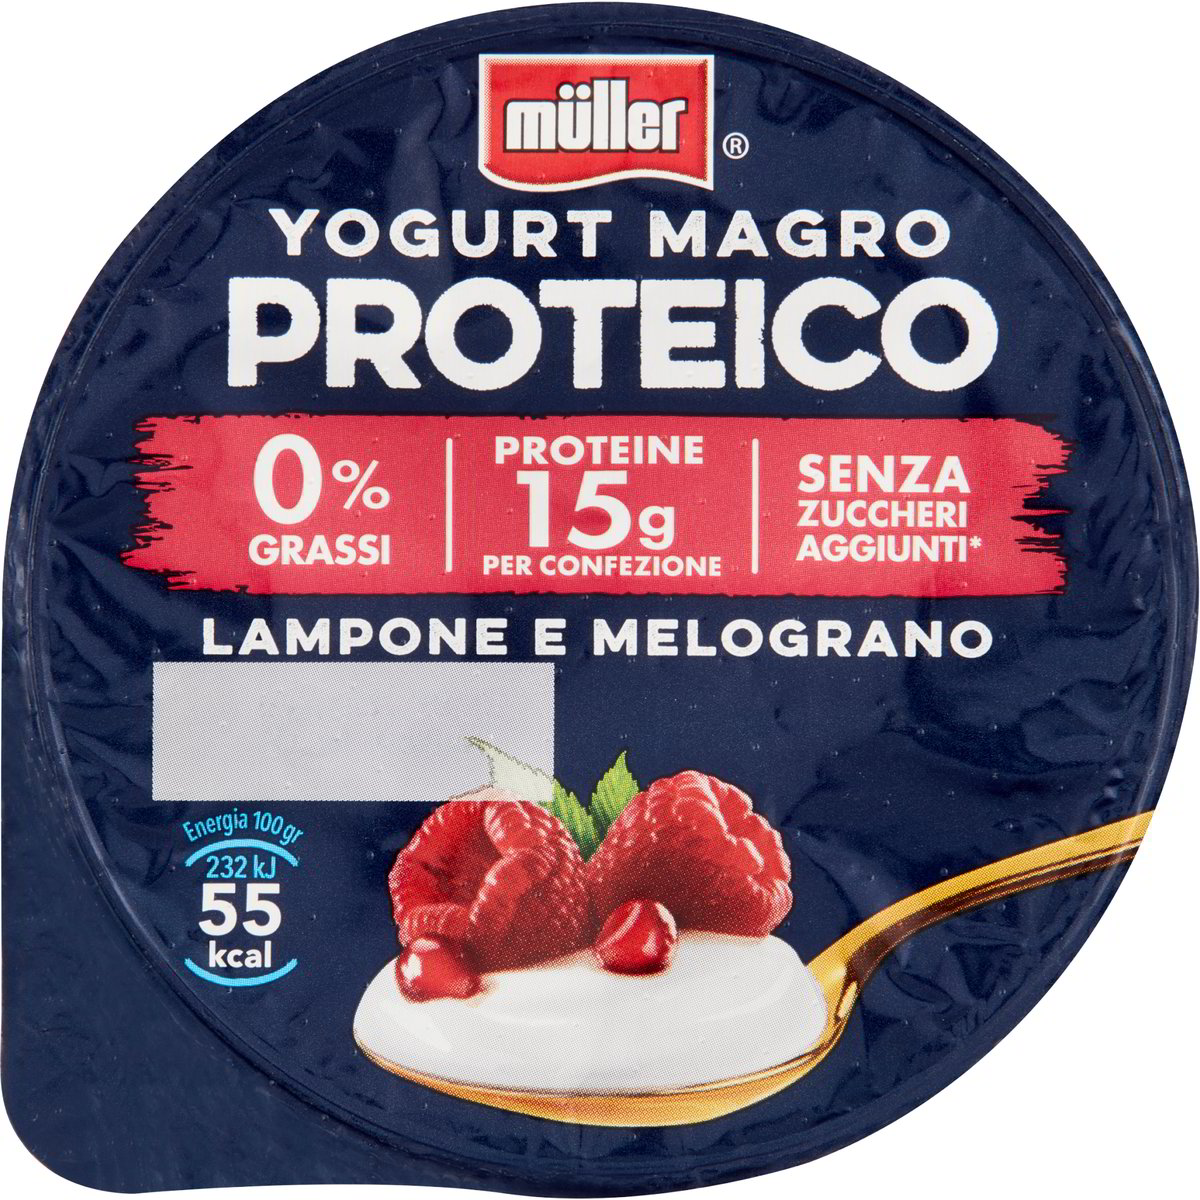 Yogurt magro proteico lampone e melograno MULLER 180 G - Coop Shop